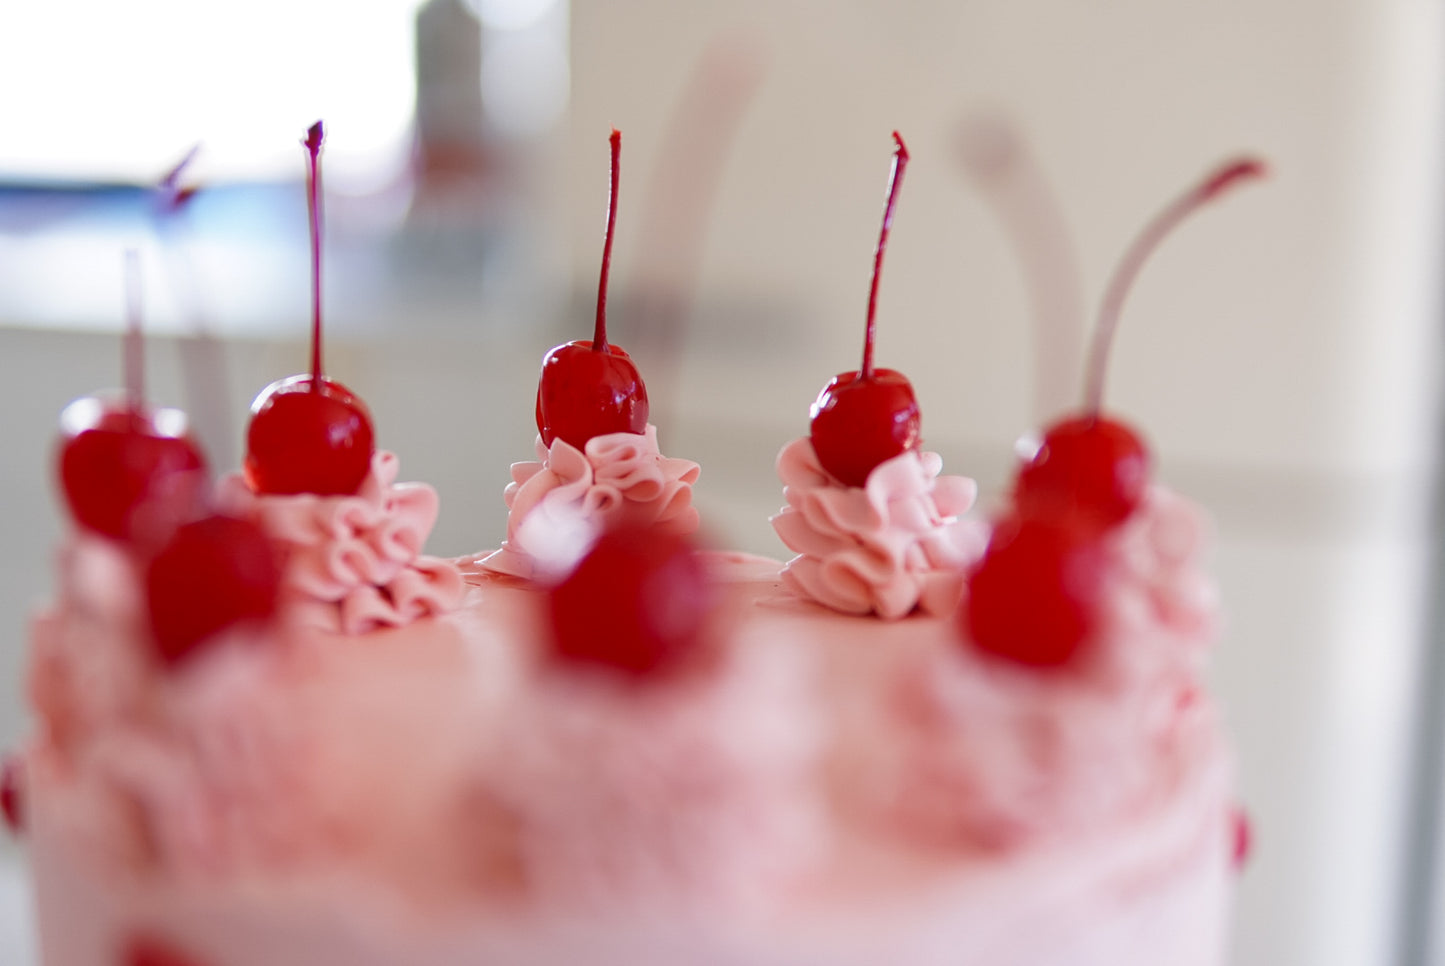 Sweethearts Cake